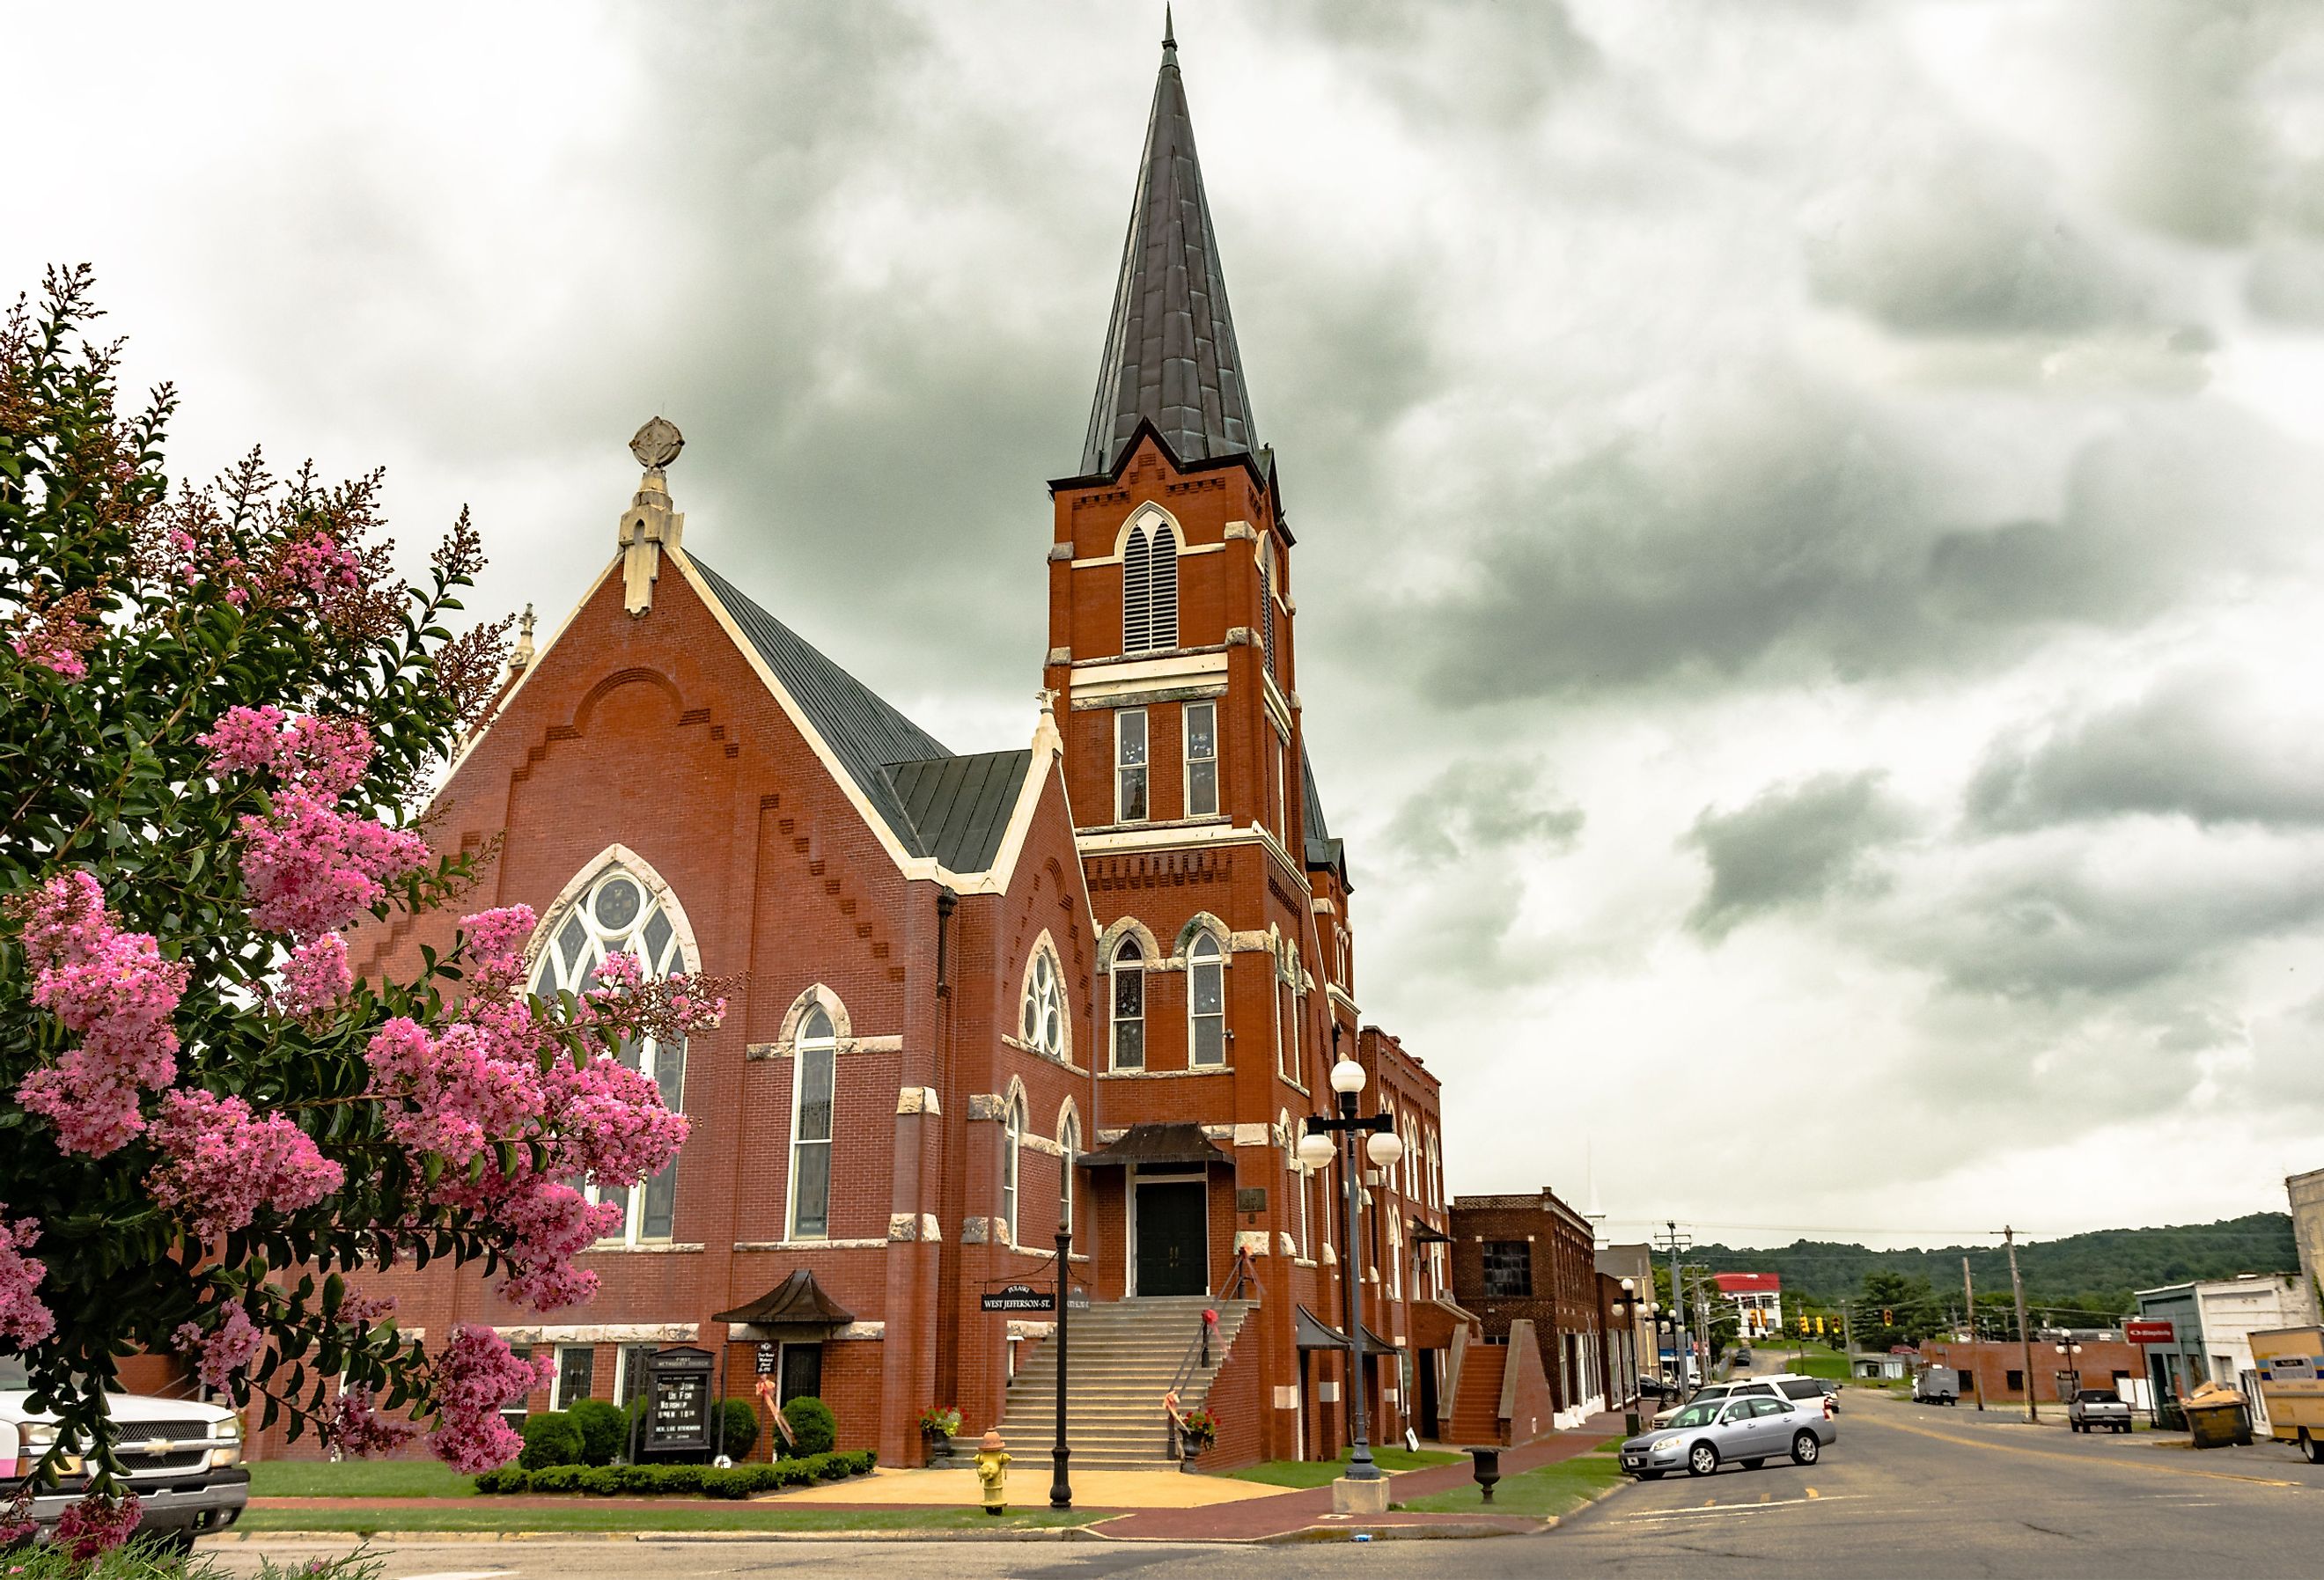 First Methodist Church in Pulaski, Tennessee. Image credit JNix via Shutterstock